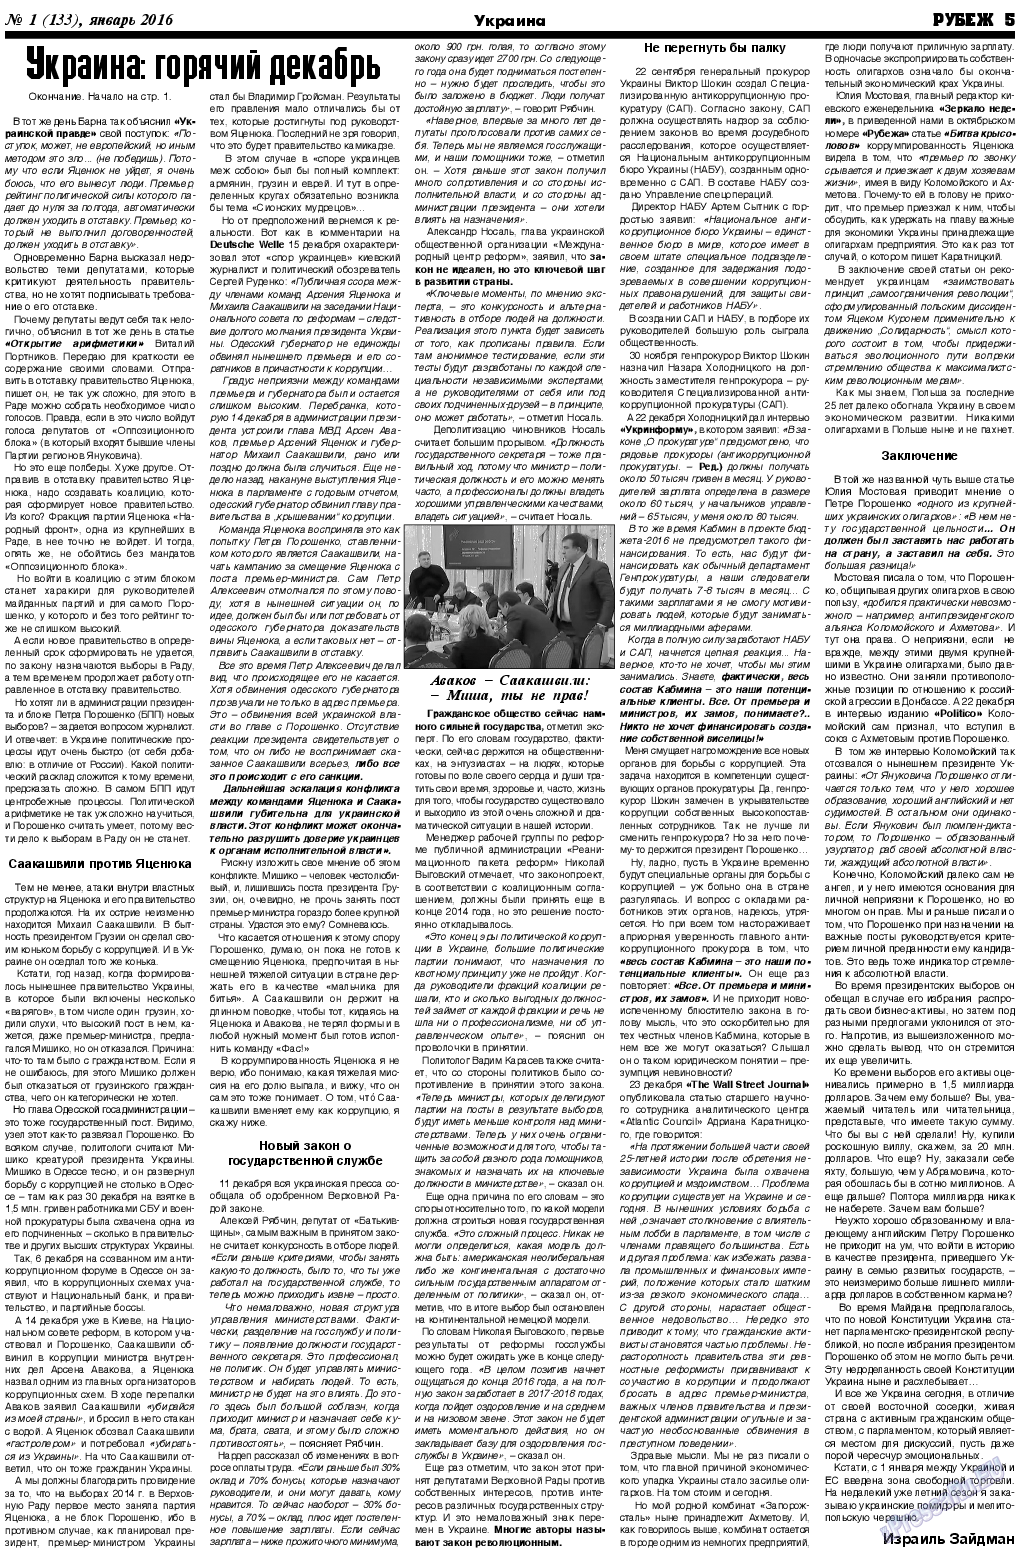 Рубеж, газета. 2016 №1 стр.5